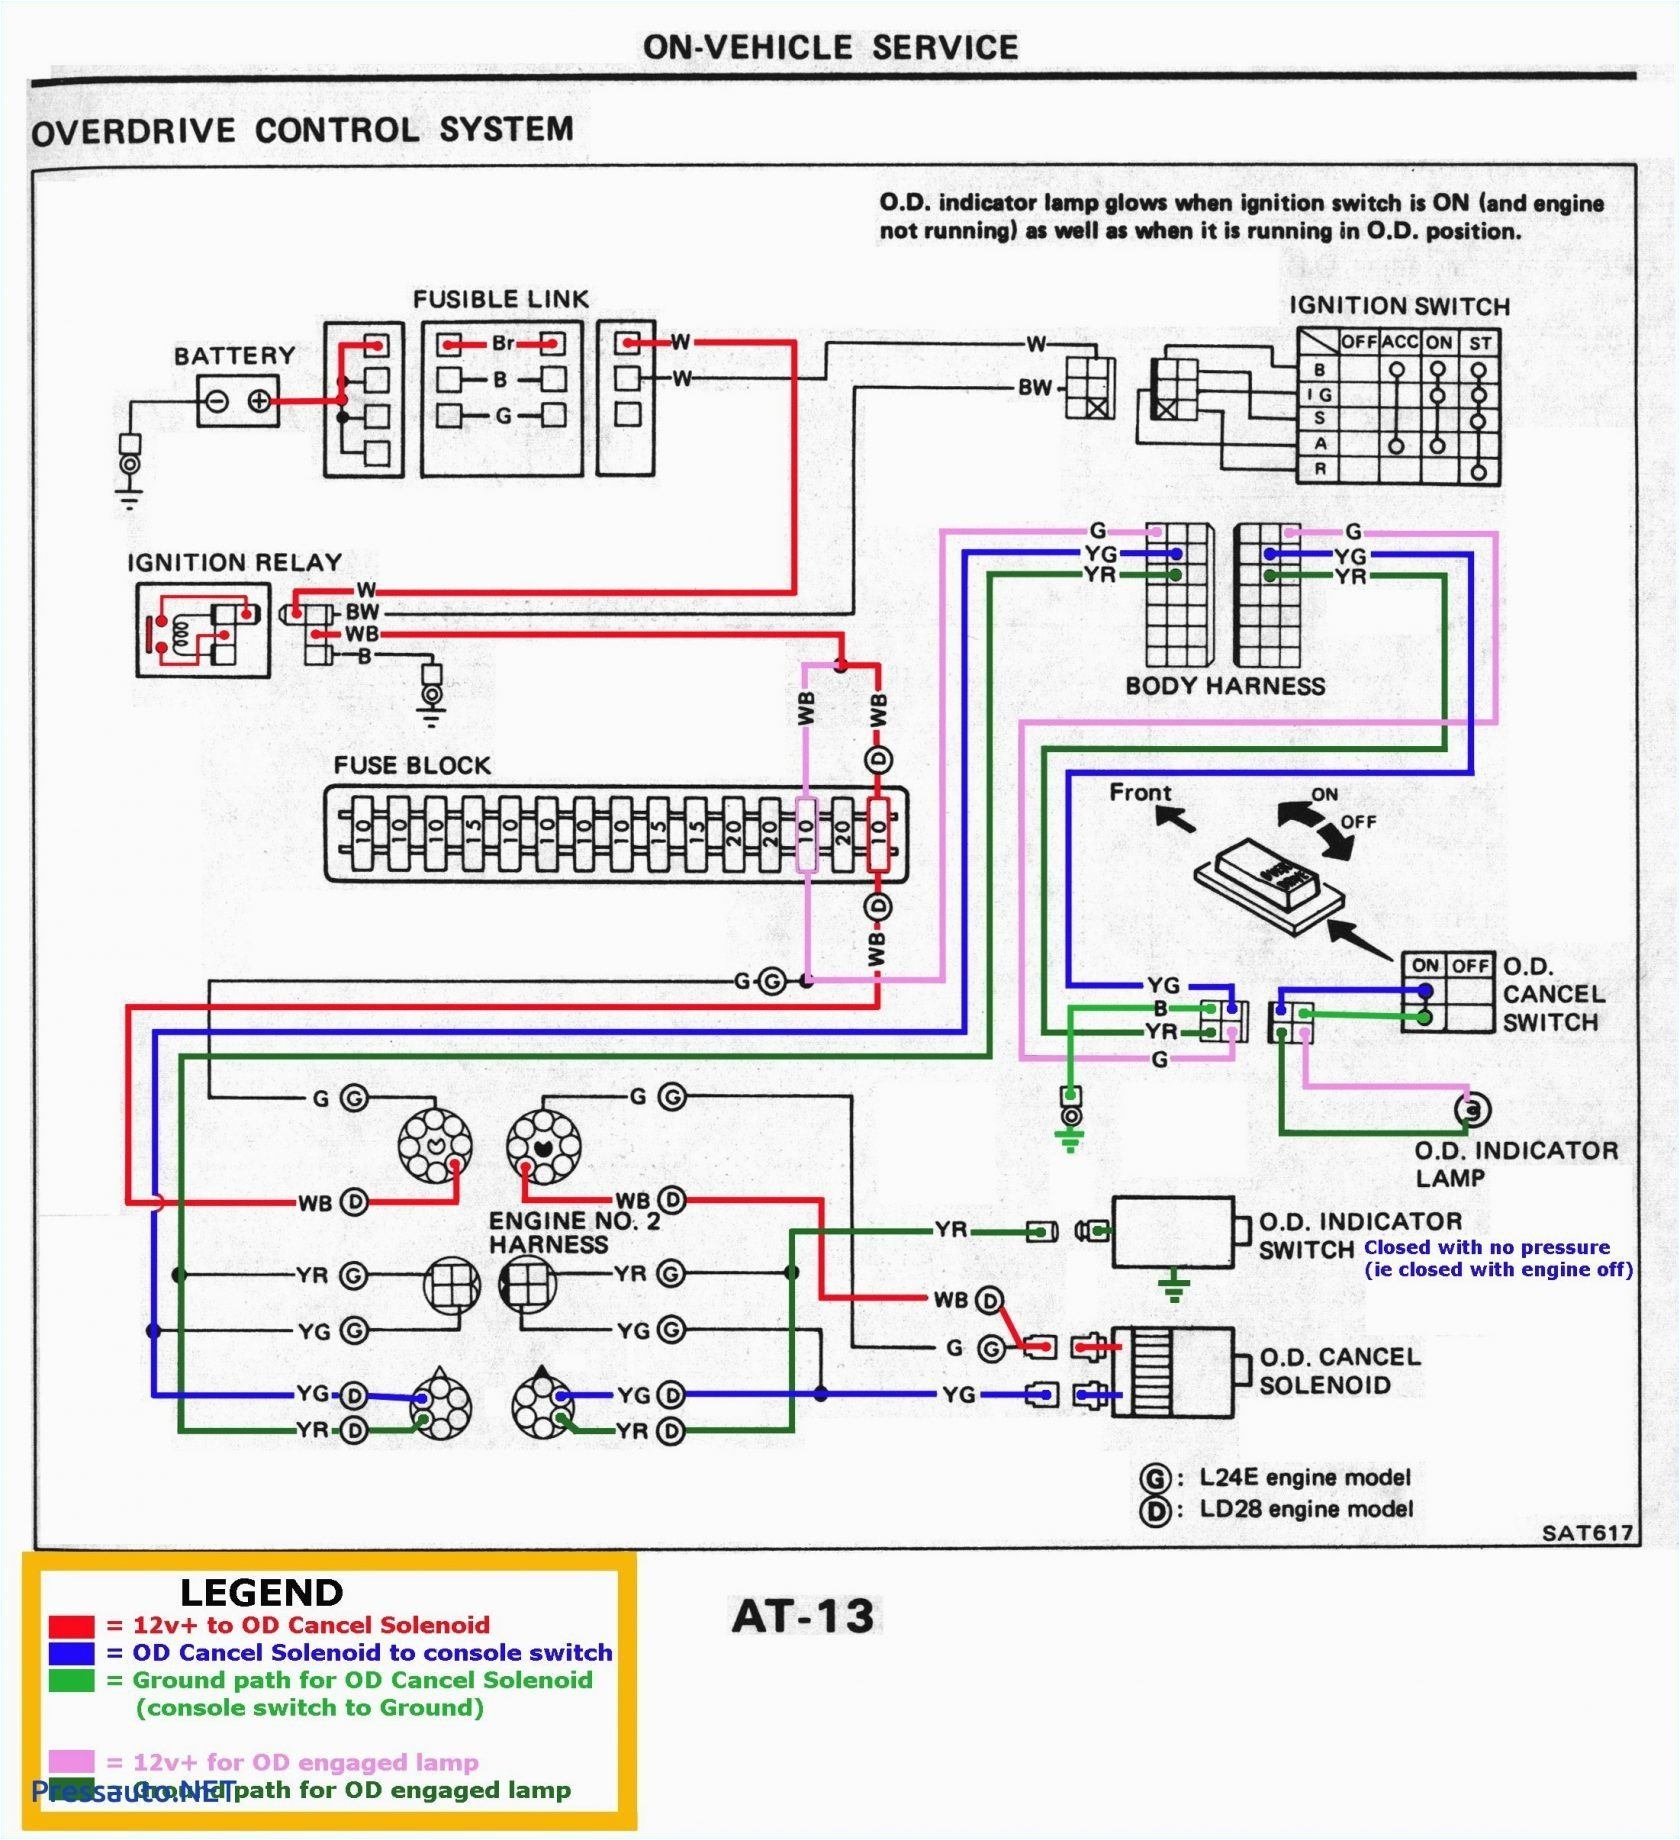 01 audi a4 radio wiring diagrams wiring diagram db wiring diagram for audi a4 radio 2003 audi a4 radio wiring